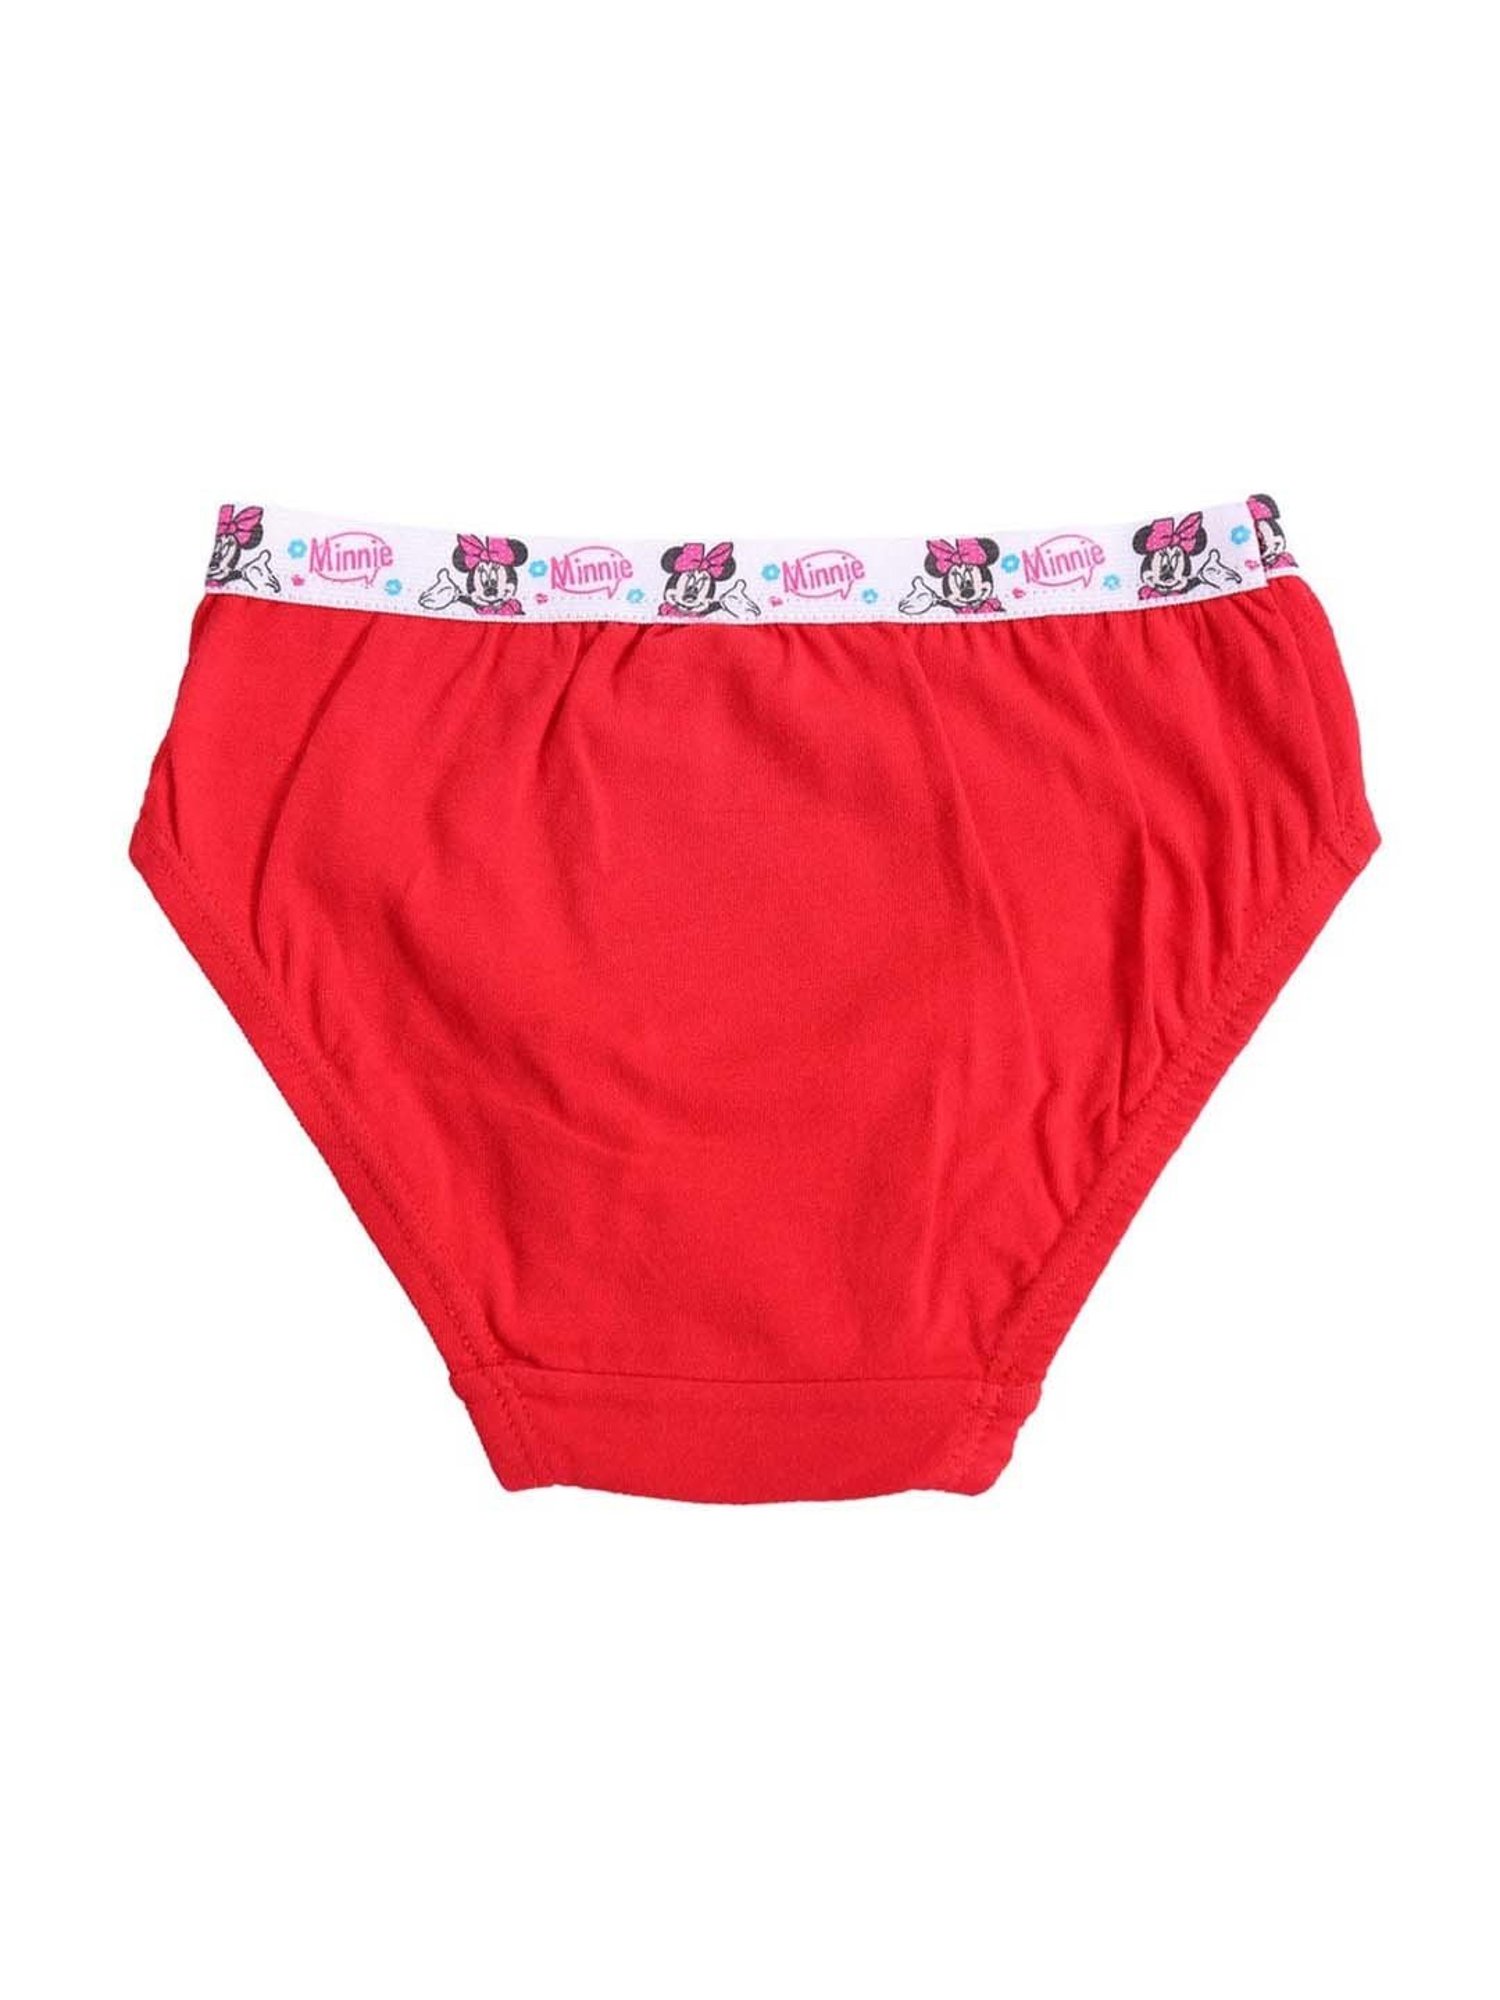 Buy Bodycare Kids Multi Cotton Printed Panties for Girls Clothing Online @  Tata CLiQ